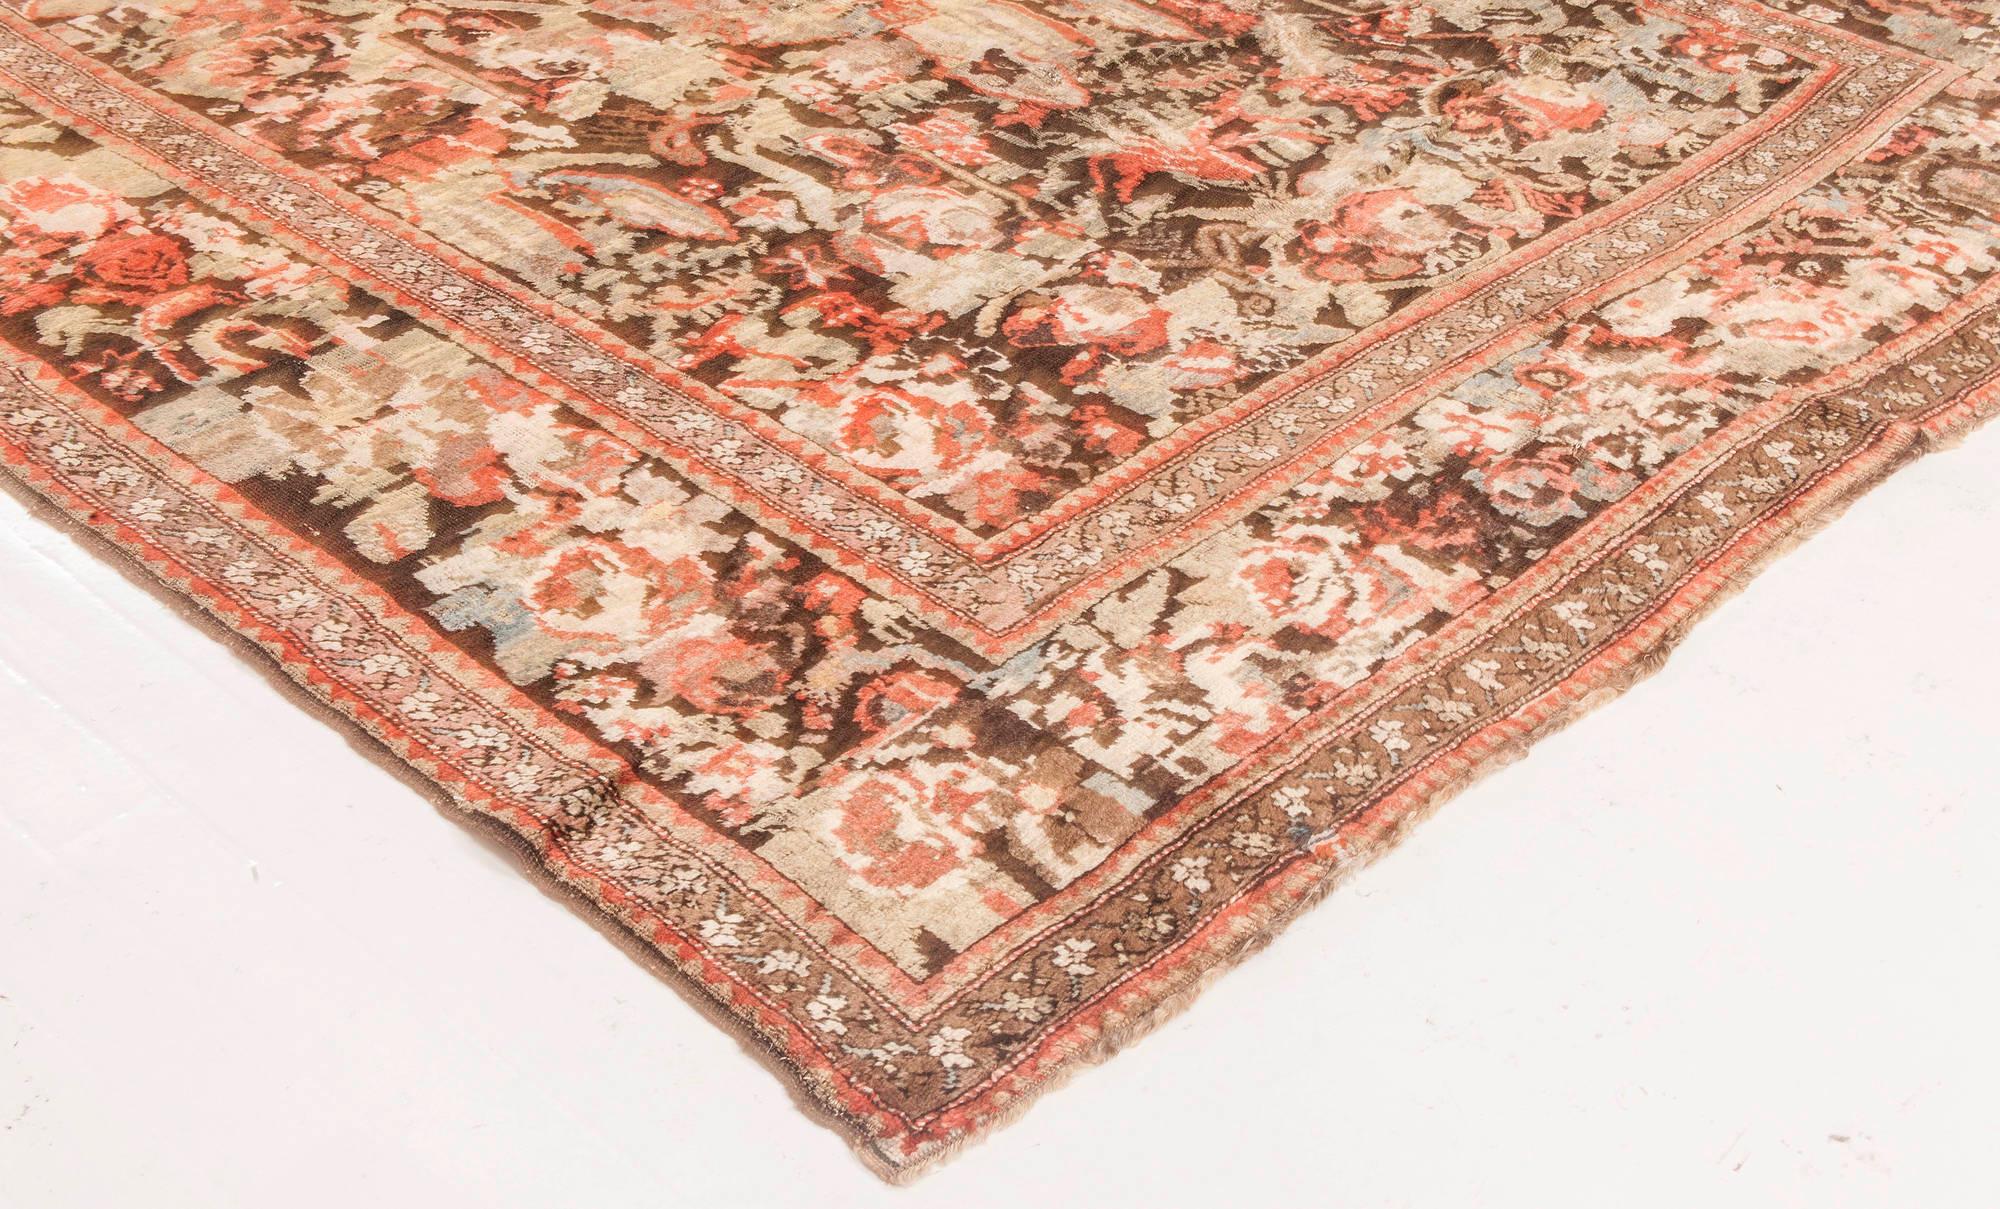 19th Century Karabagh Handmade Wool Carpet For Sale 2